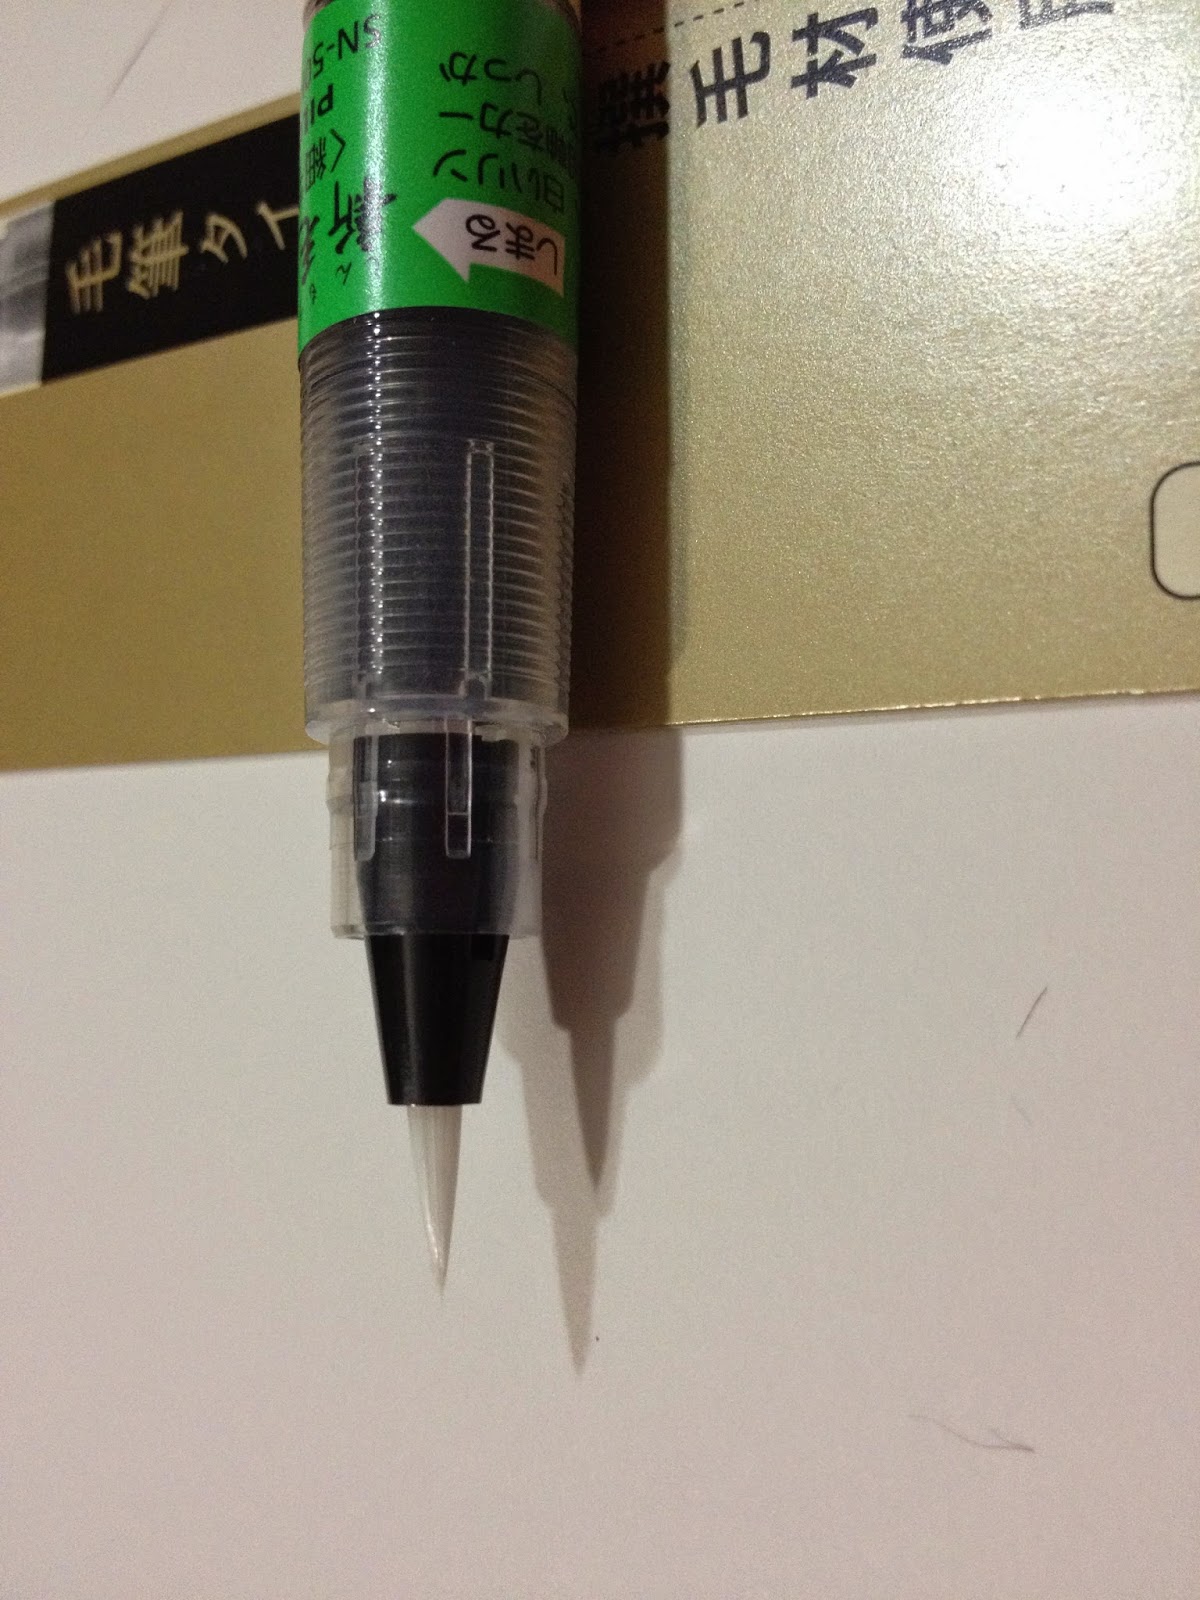 Review: Pilot Pocket Brush Pen - Hard — The Pen Addict